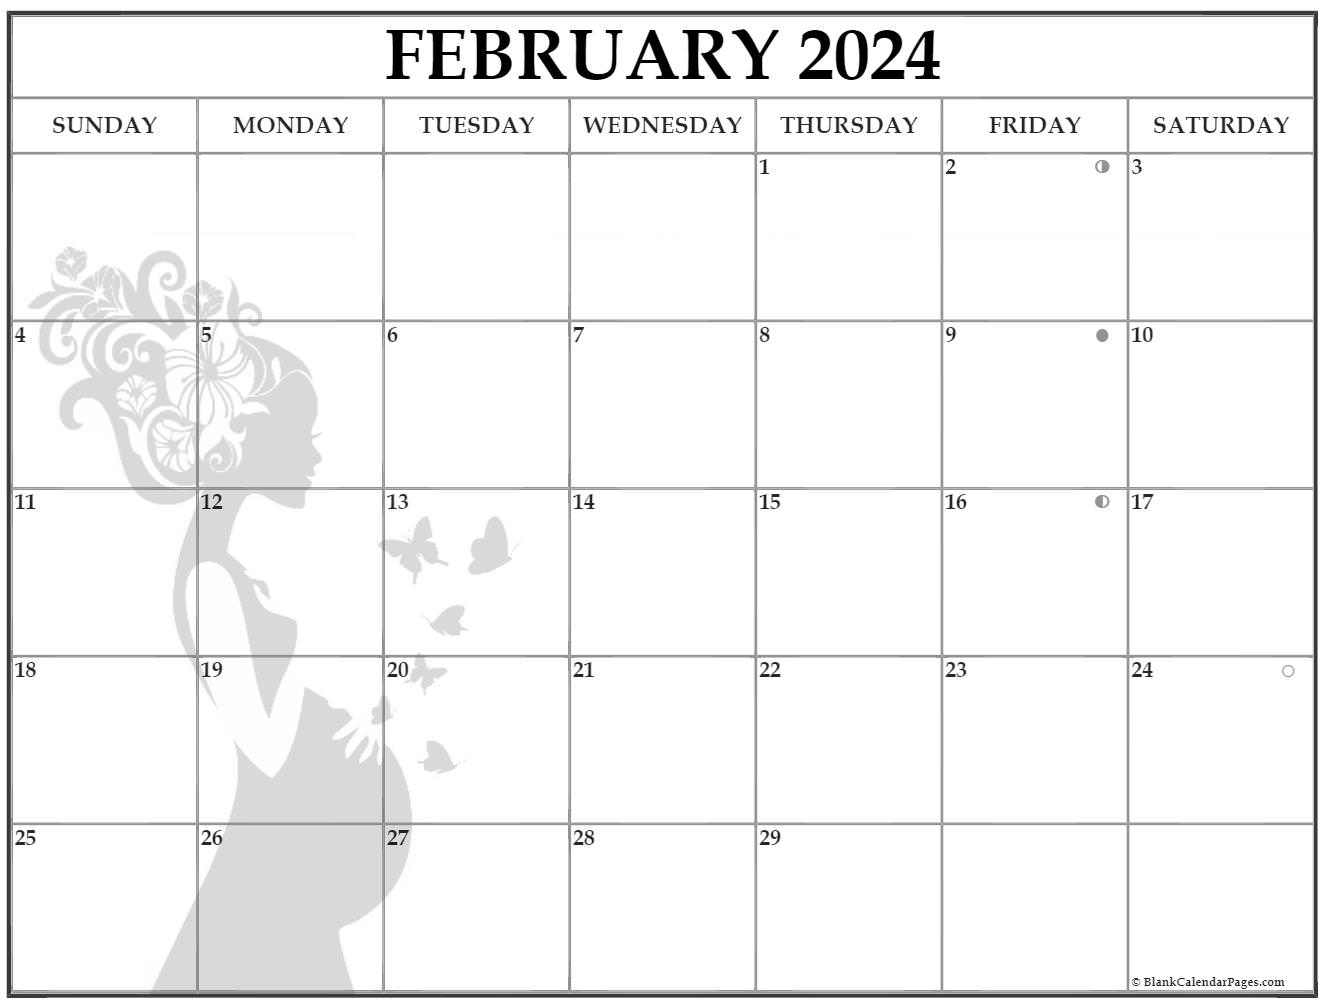 February 2020 Pregnancy Calendar | Fertility Calendar1767 x 1339